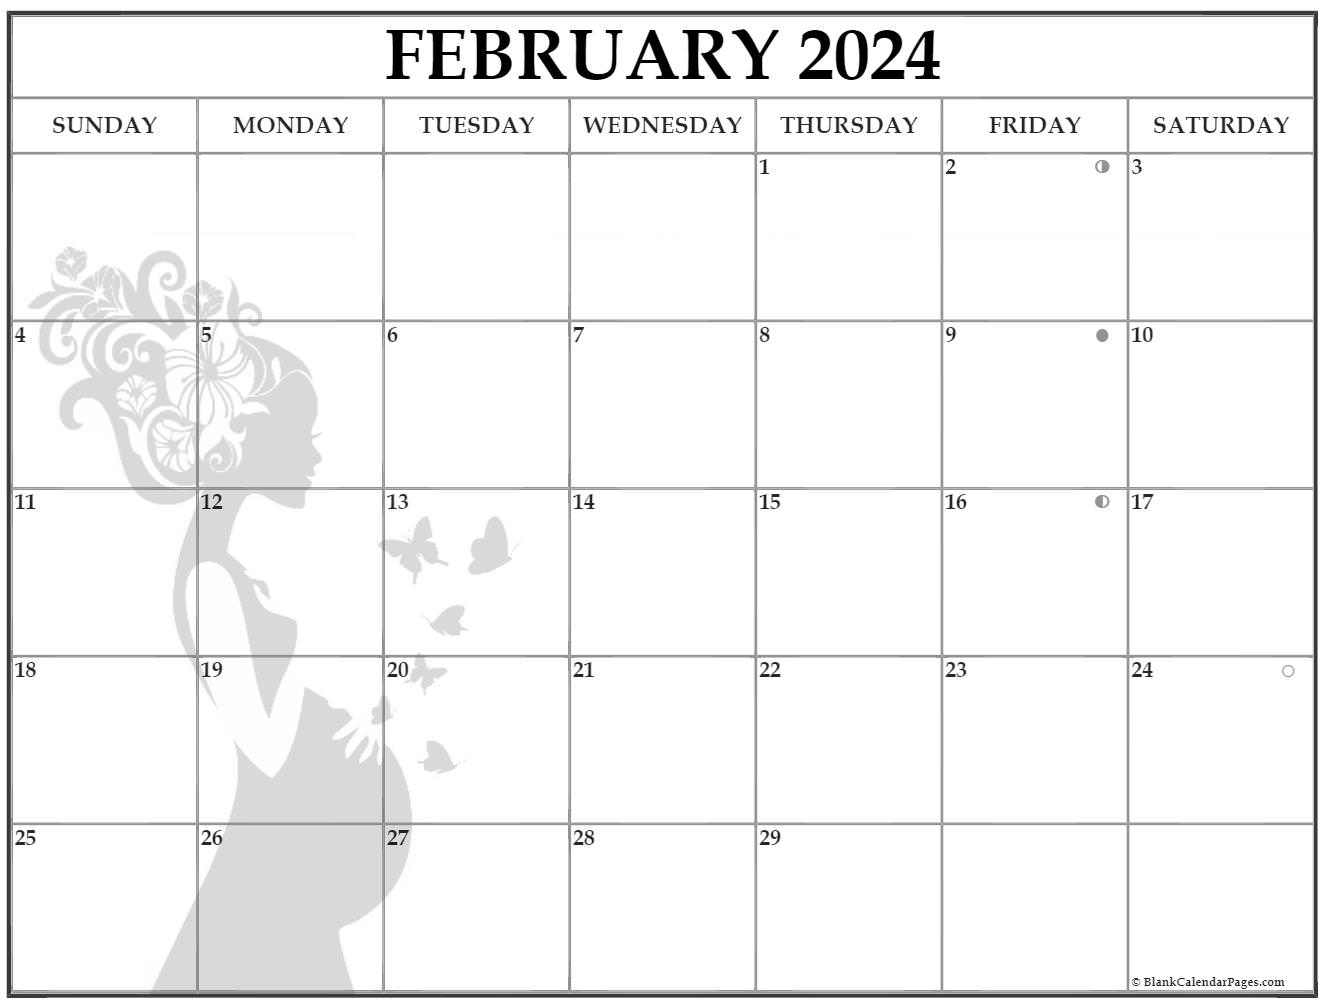 February 2020 Pregnancy Calendar | Fertility Calendar1767 x 1339